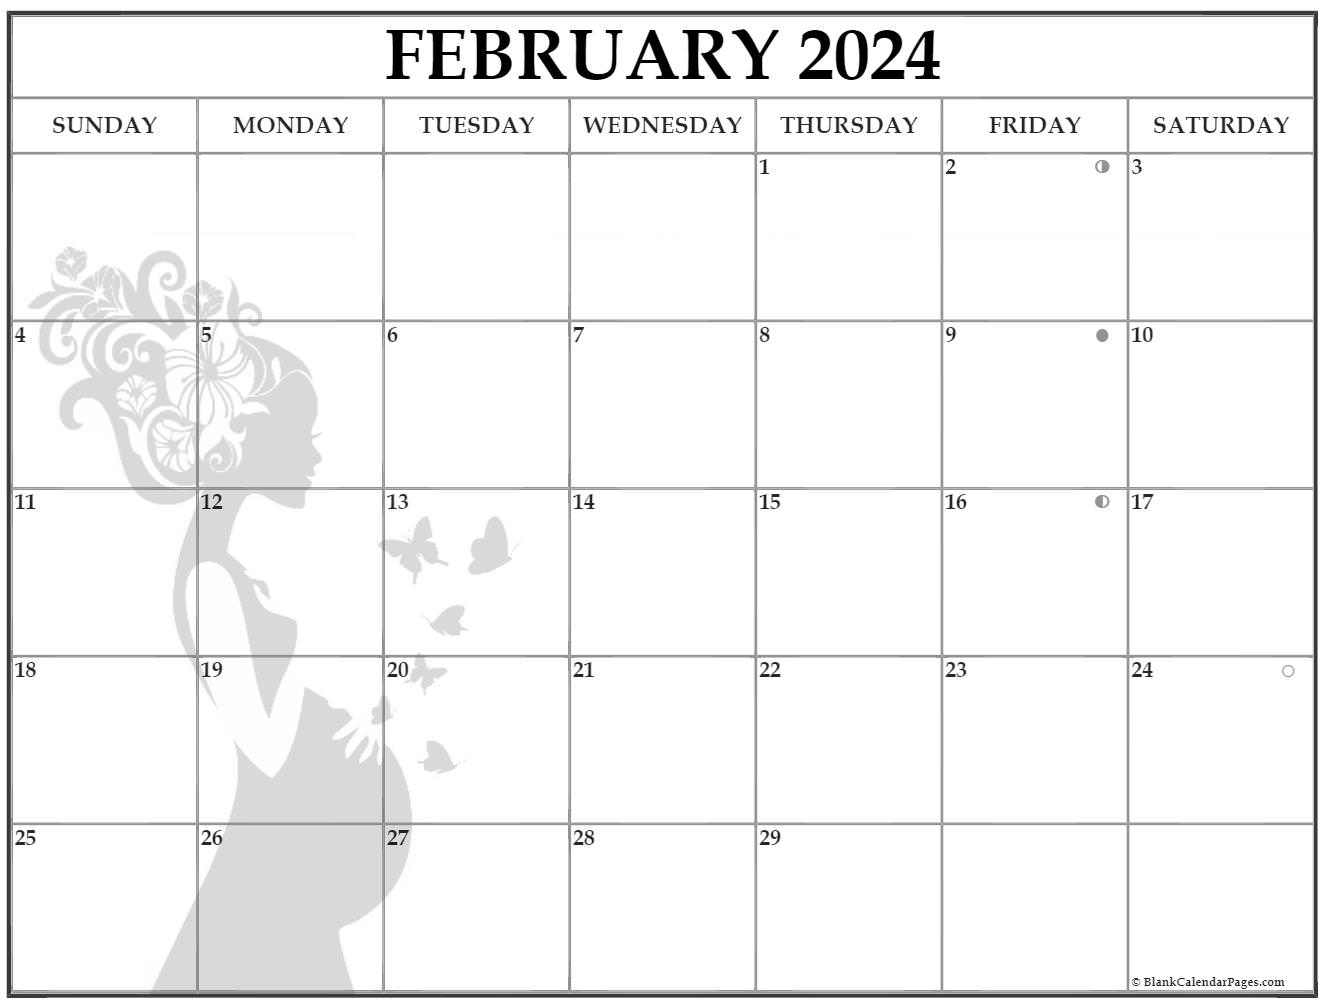 February 2020 Pregnancy Calendar | Fertility Calendar1767 x 1339